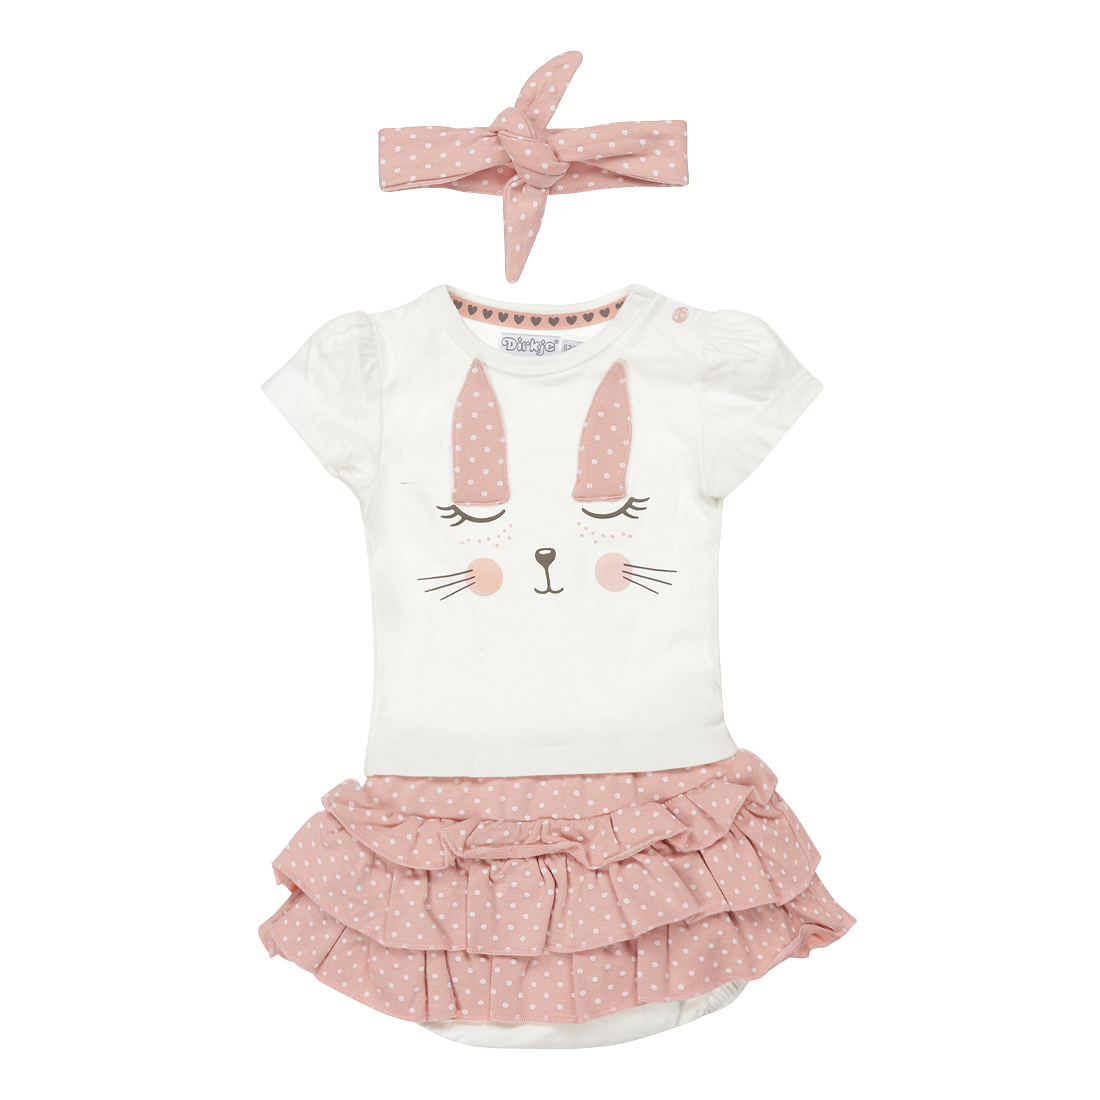 Girls baby set T-shirt & skirt off-white pink rabbit | Dirkje - Jenni Kidz